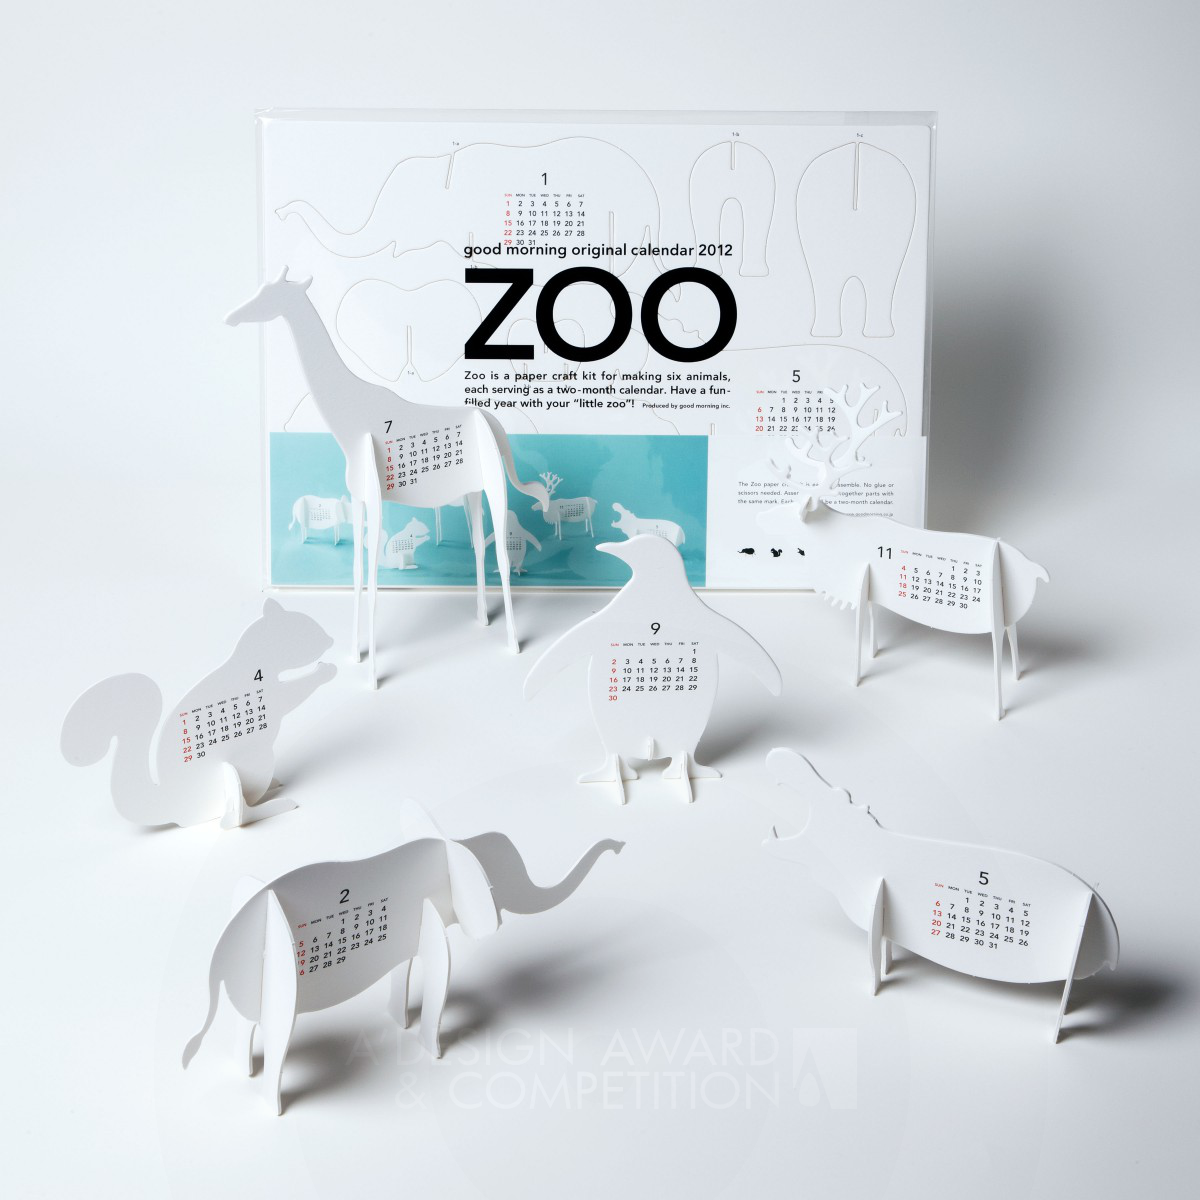 good morning original calendar 2012 “Zoo” Calendar by Katsumi Tamura